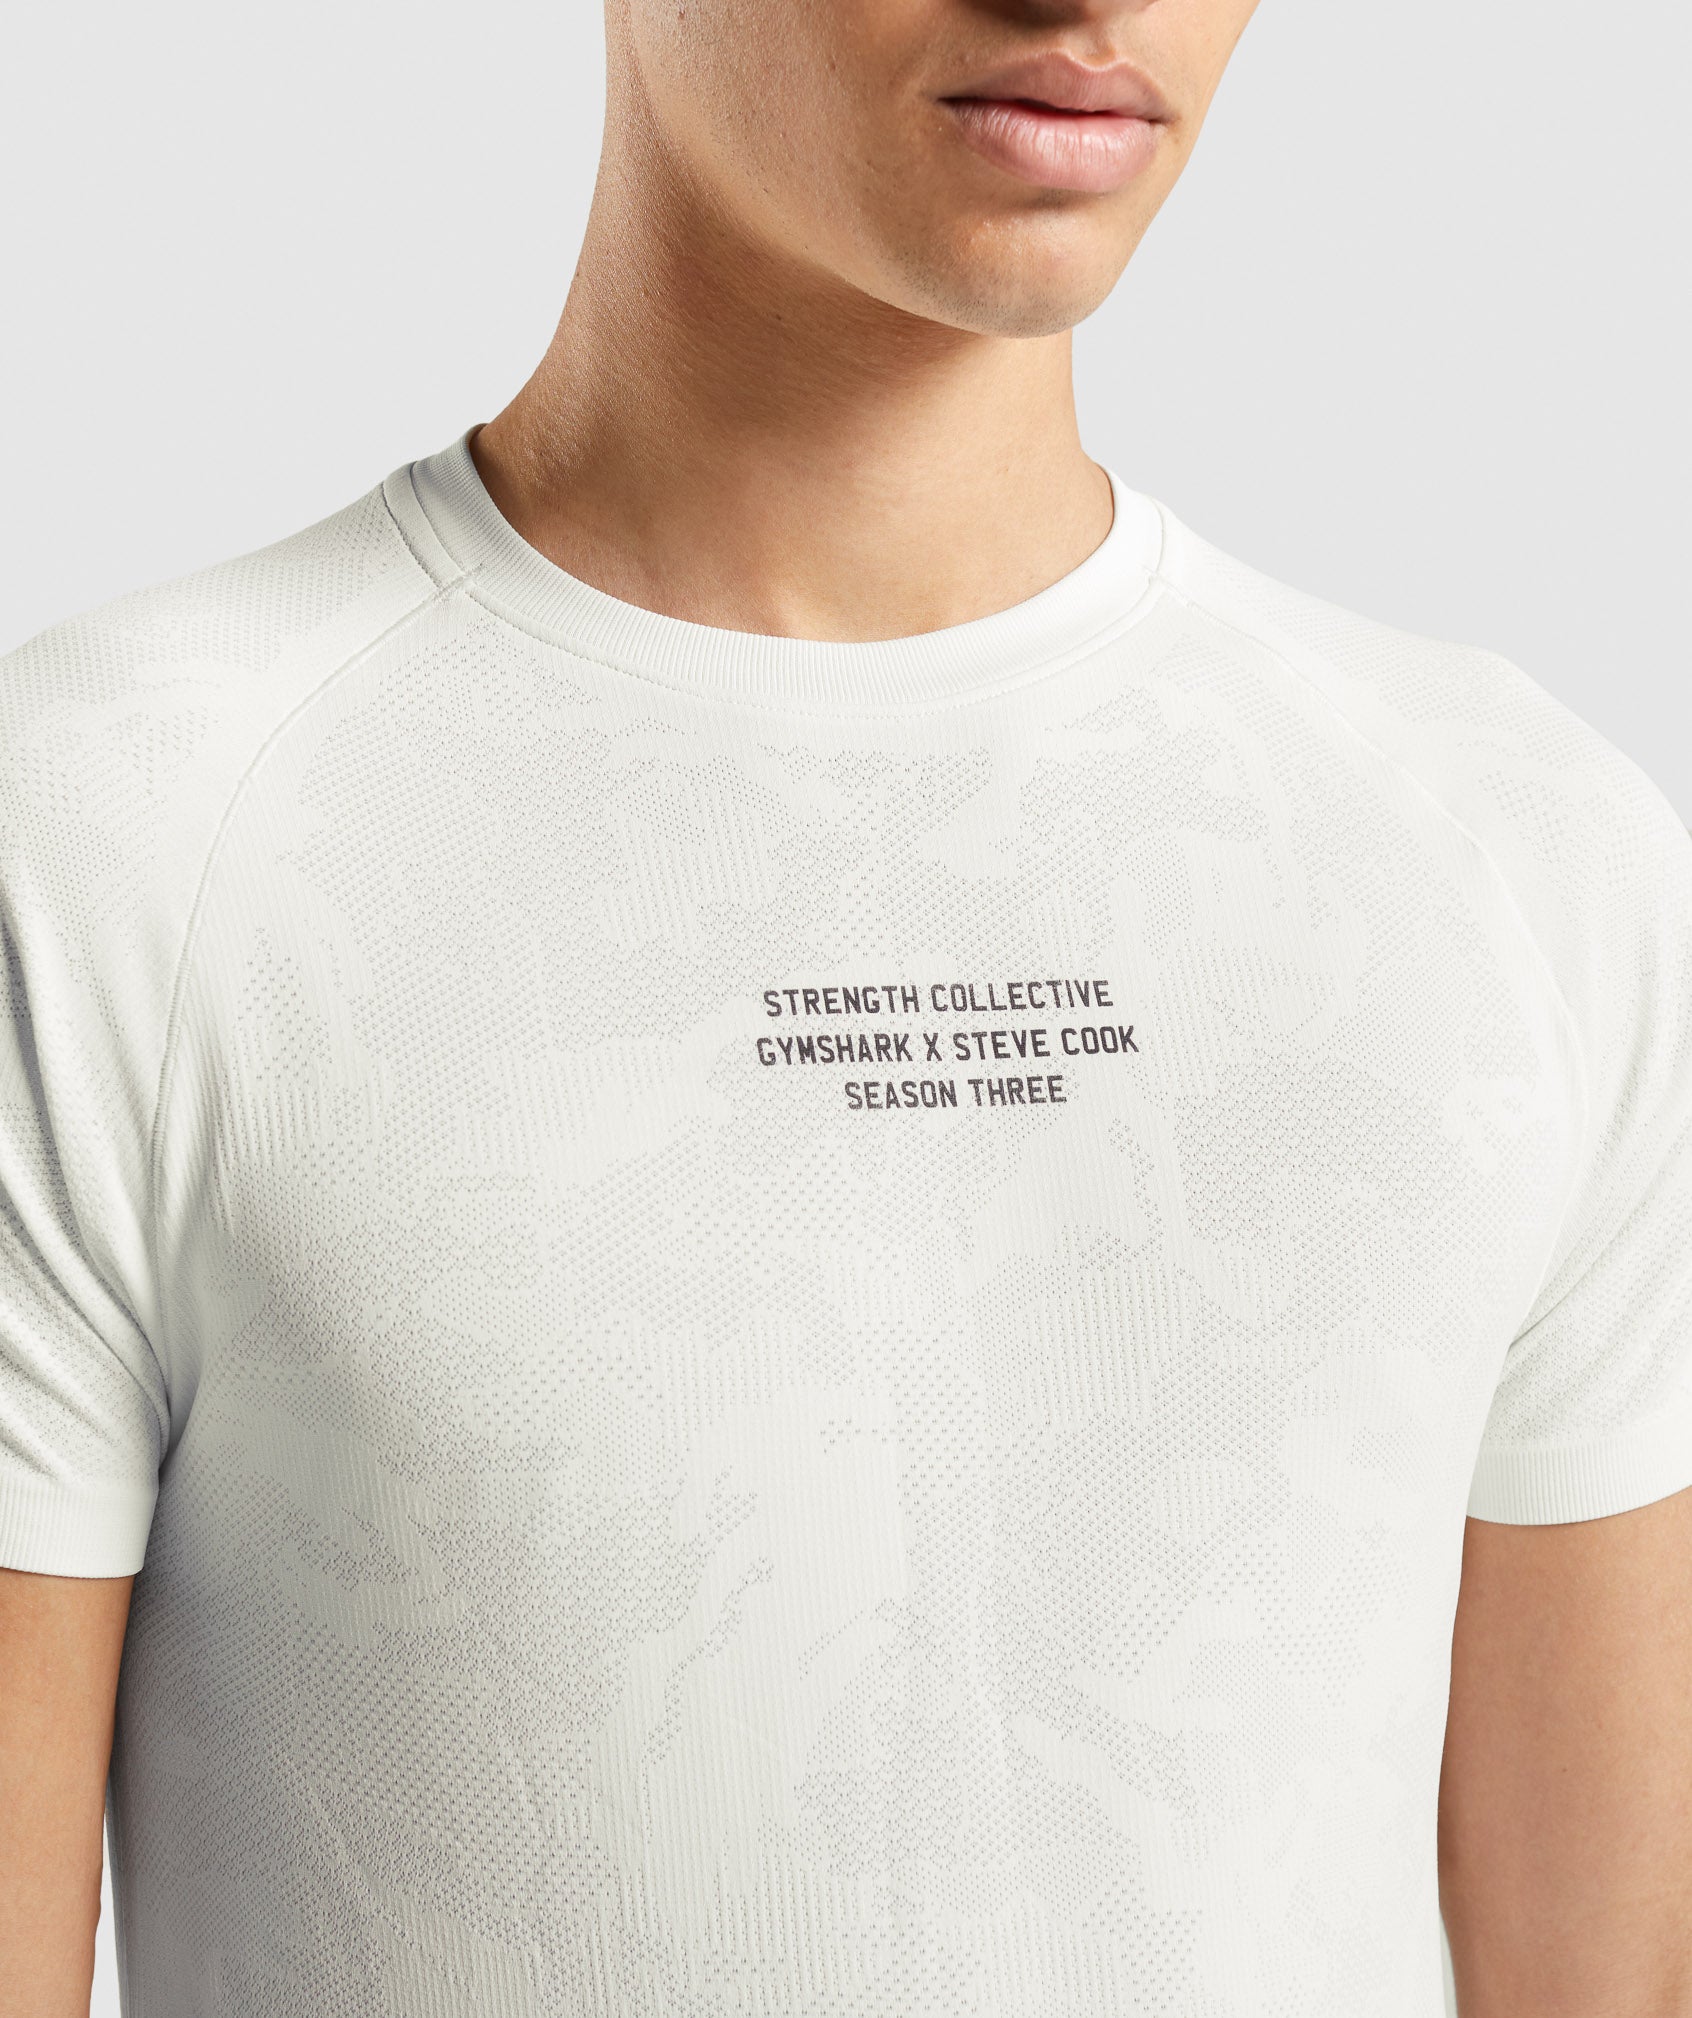 Gymshark//Steve Cook Seamless T-Shirt in Off White/Light Grey - view 6